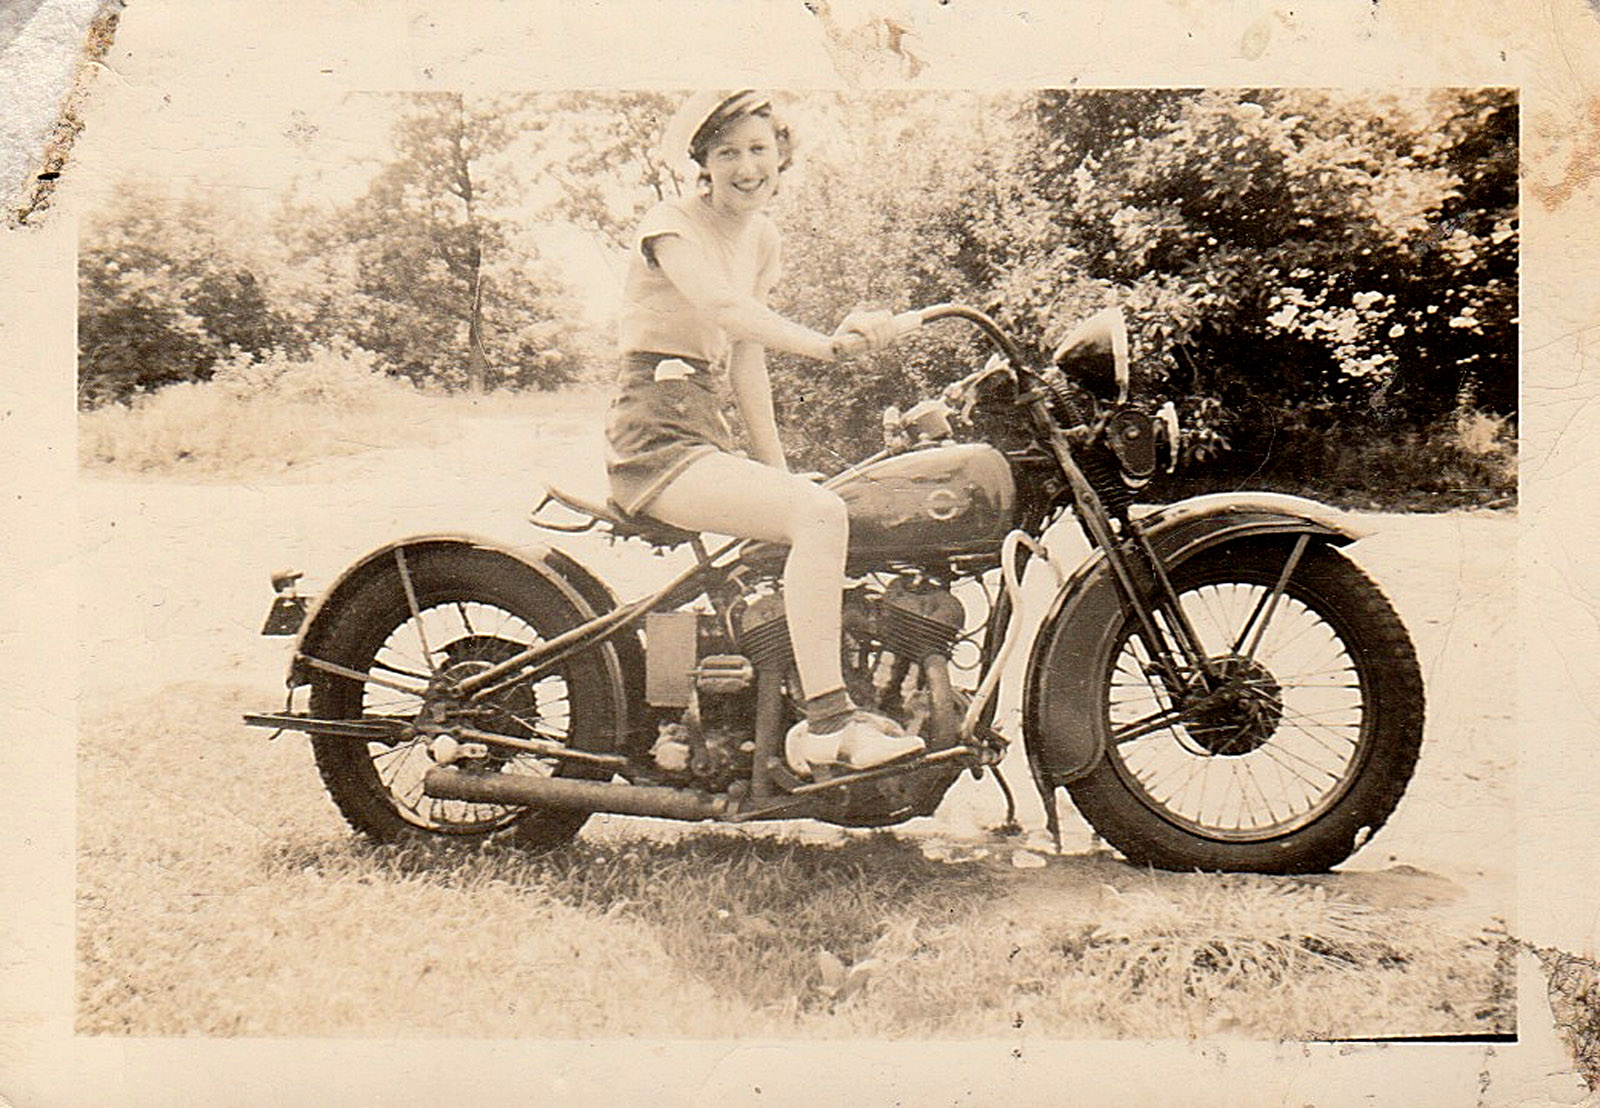 Nanny_on_motorcycle-1936.jpg